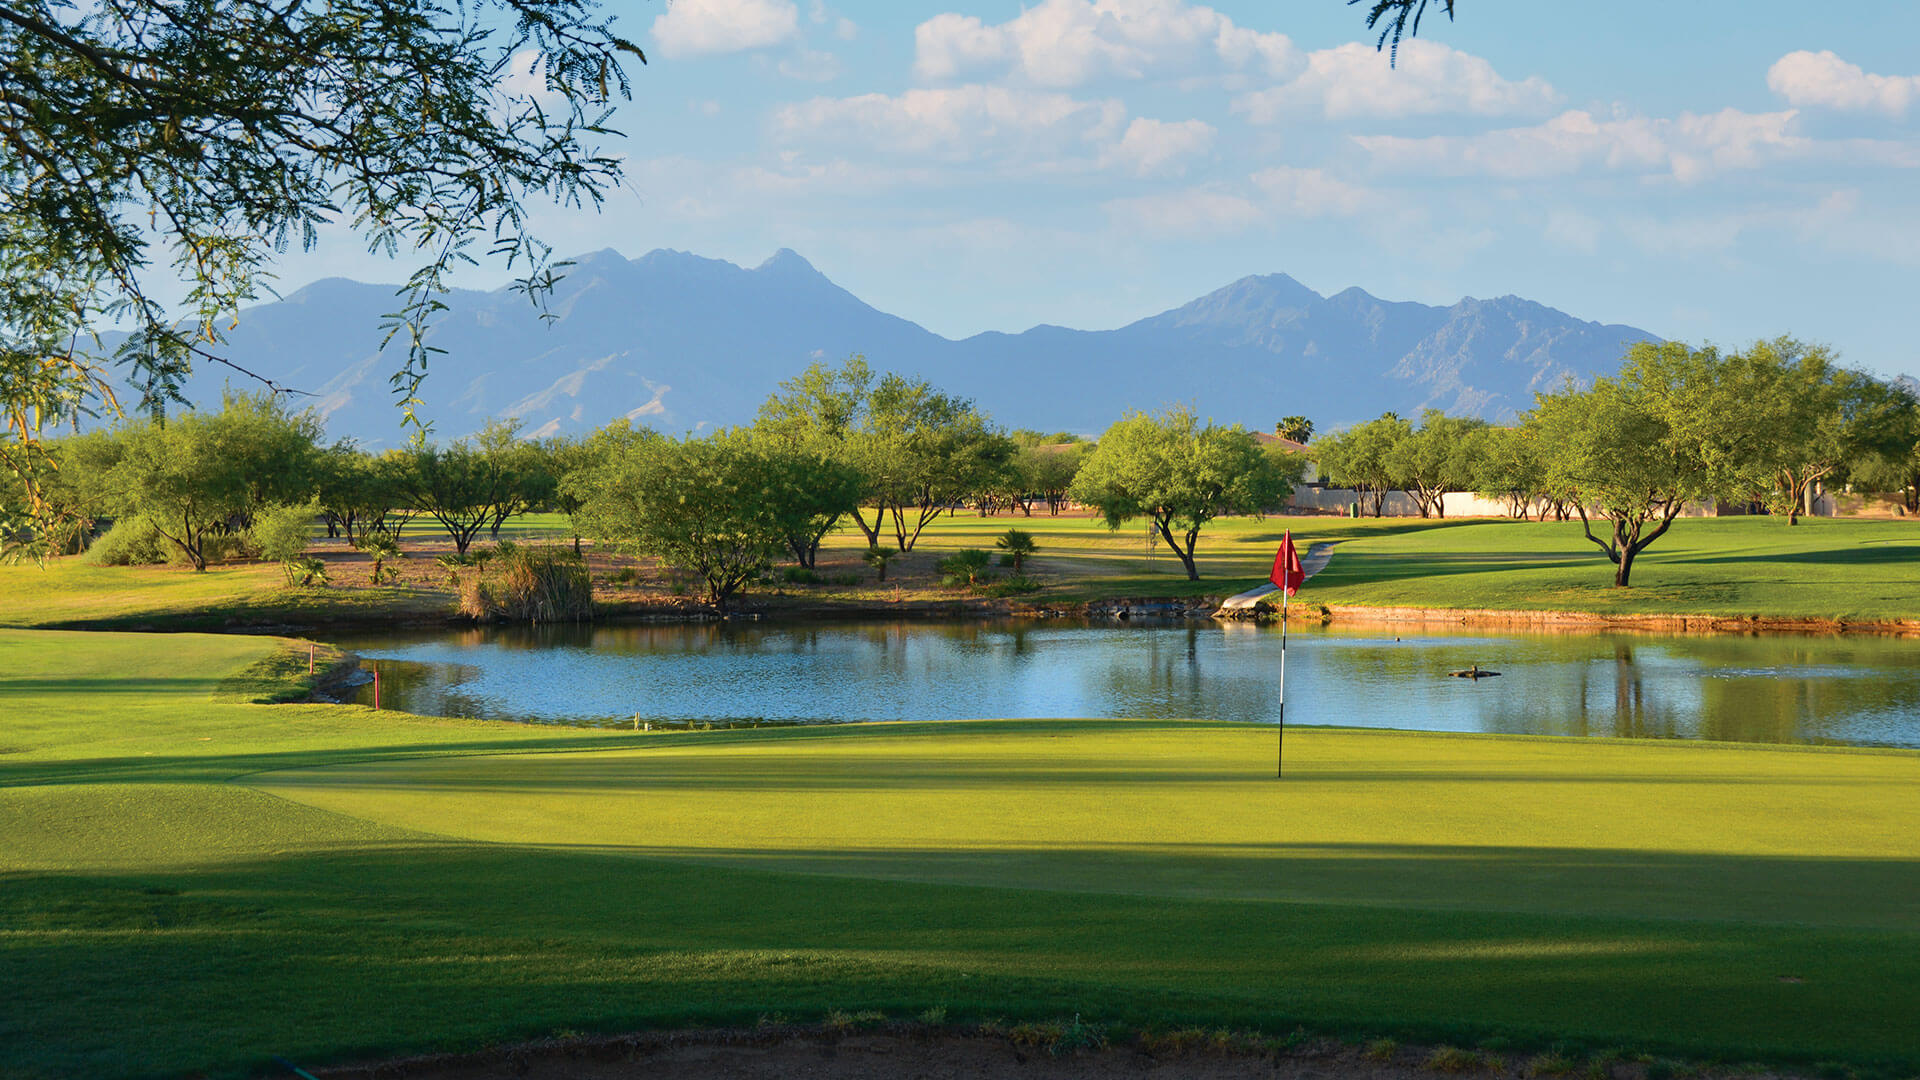 Golf at Quail Creek, a Master Planned community in Arizona